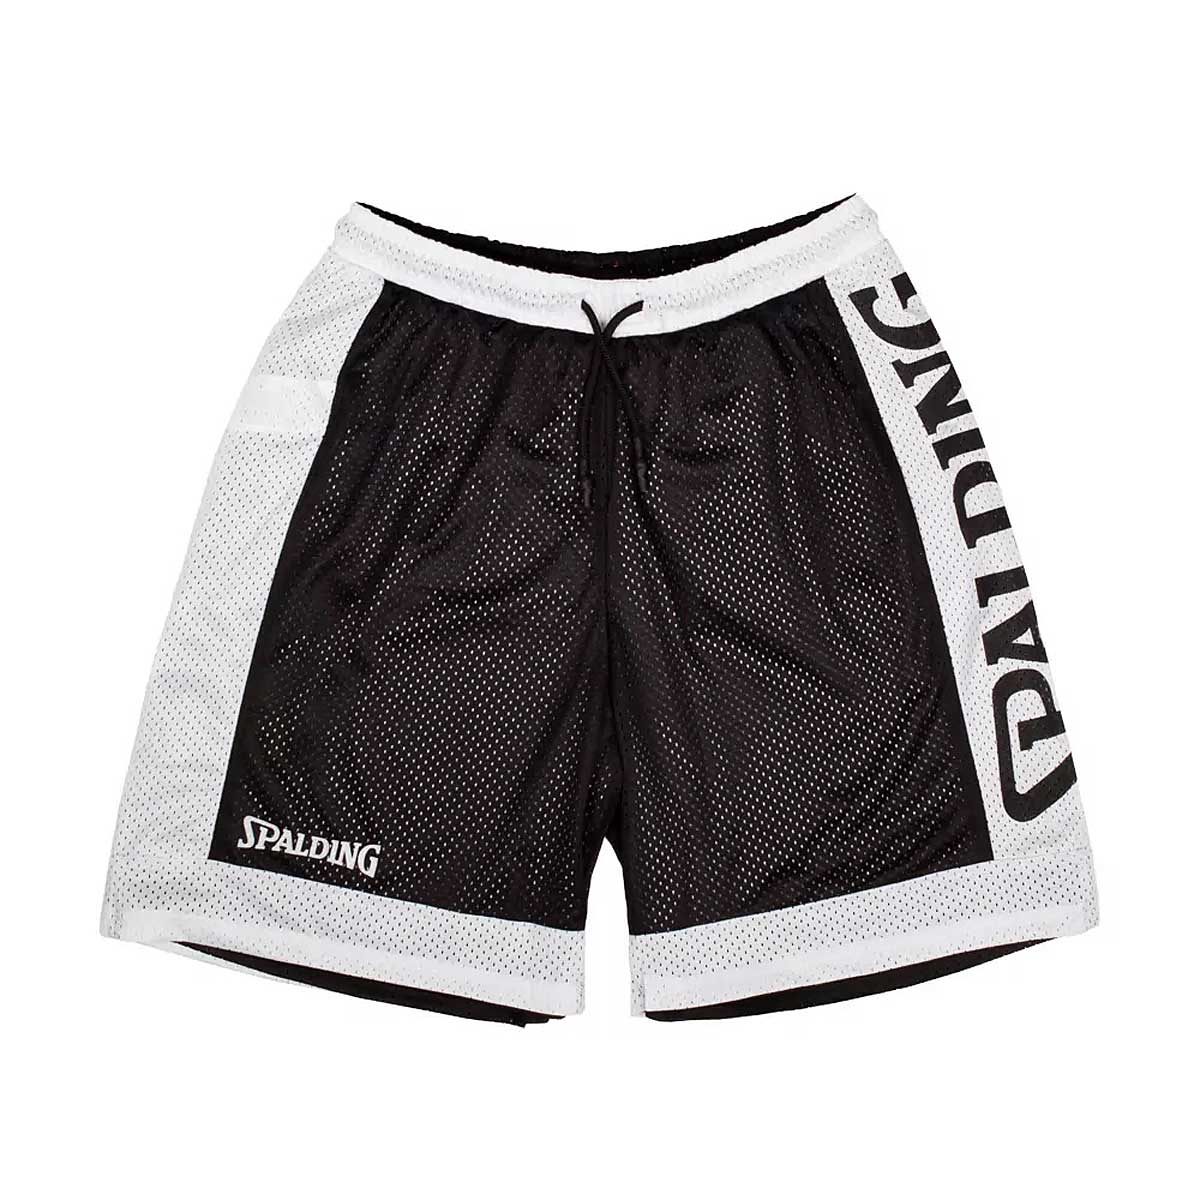 Spalding Reversible Shorts, Black